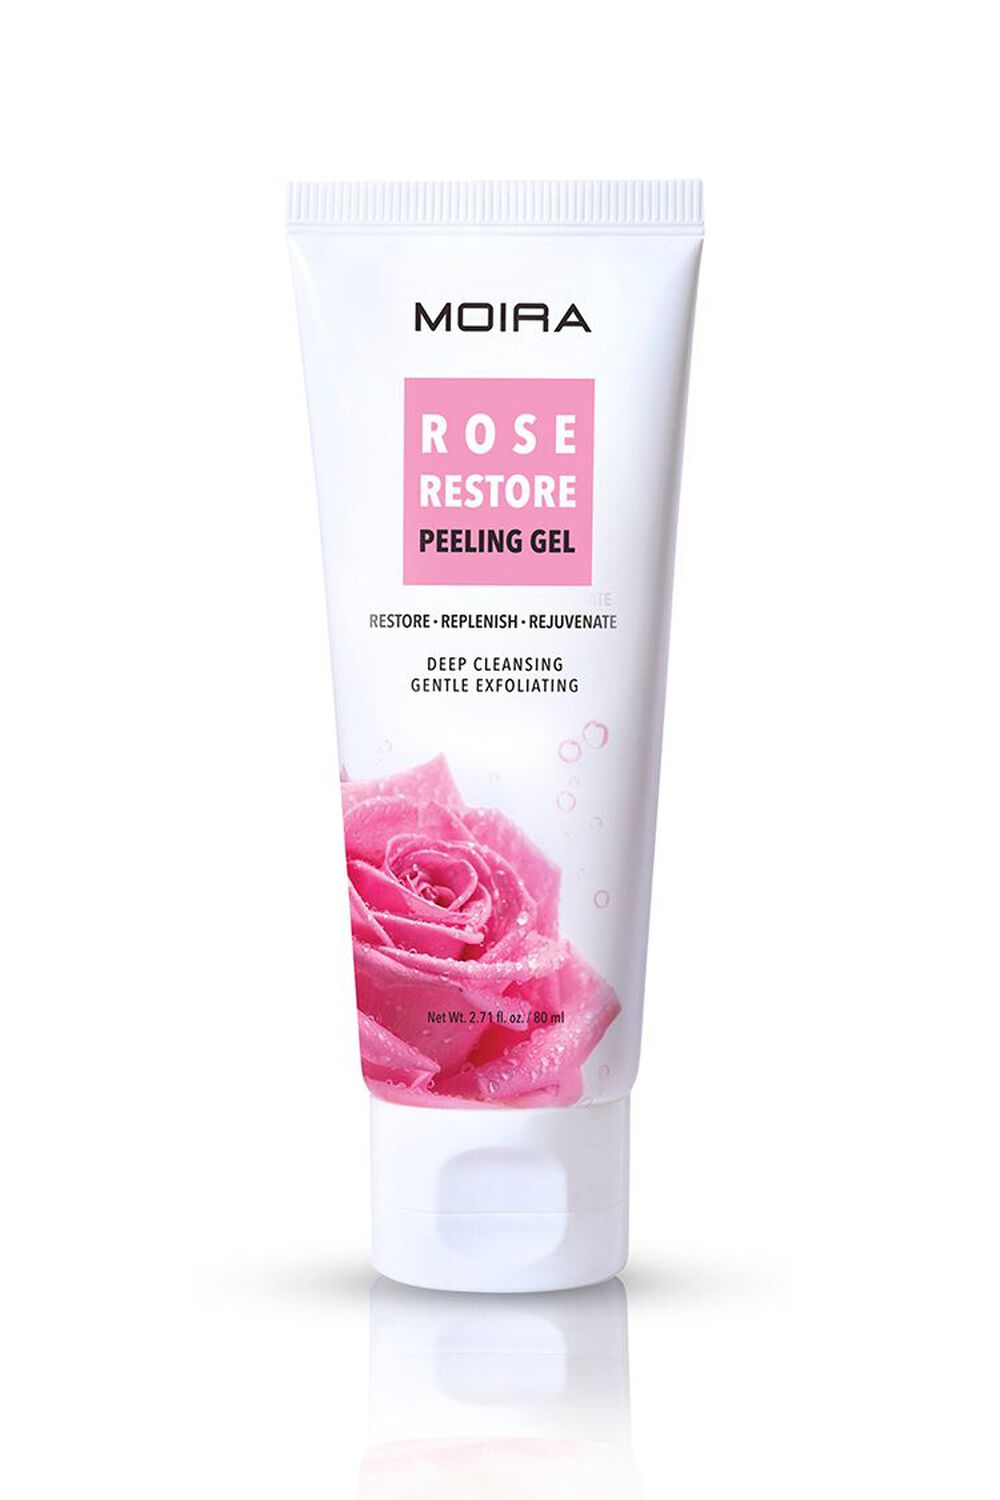 MOIRA Rose Restore Peeling Gel, image 2